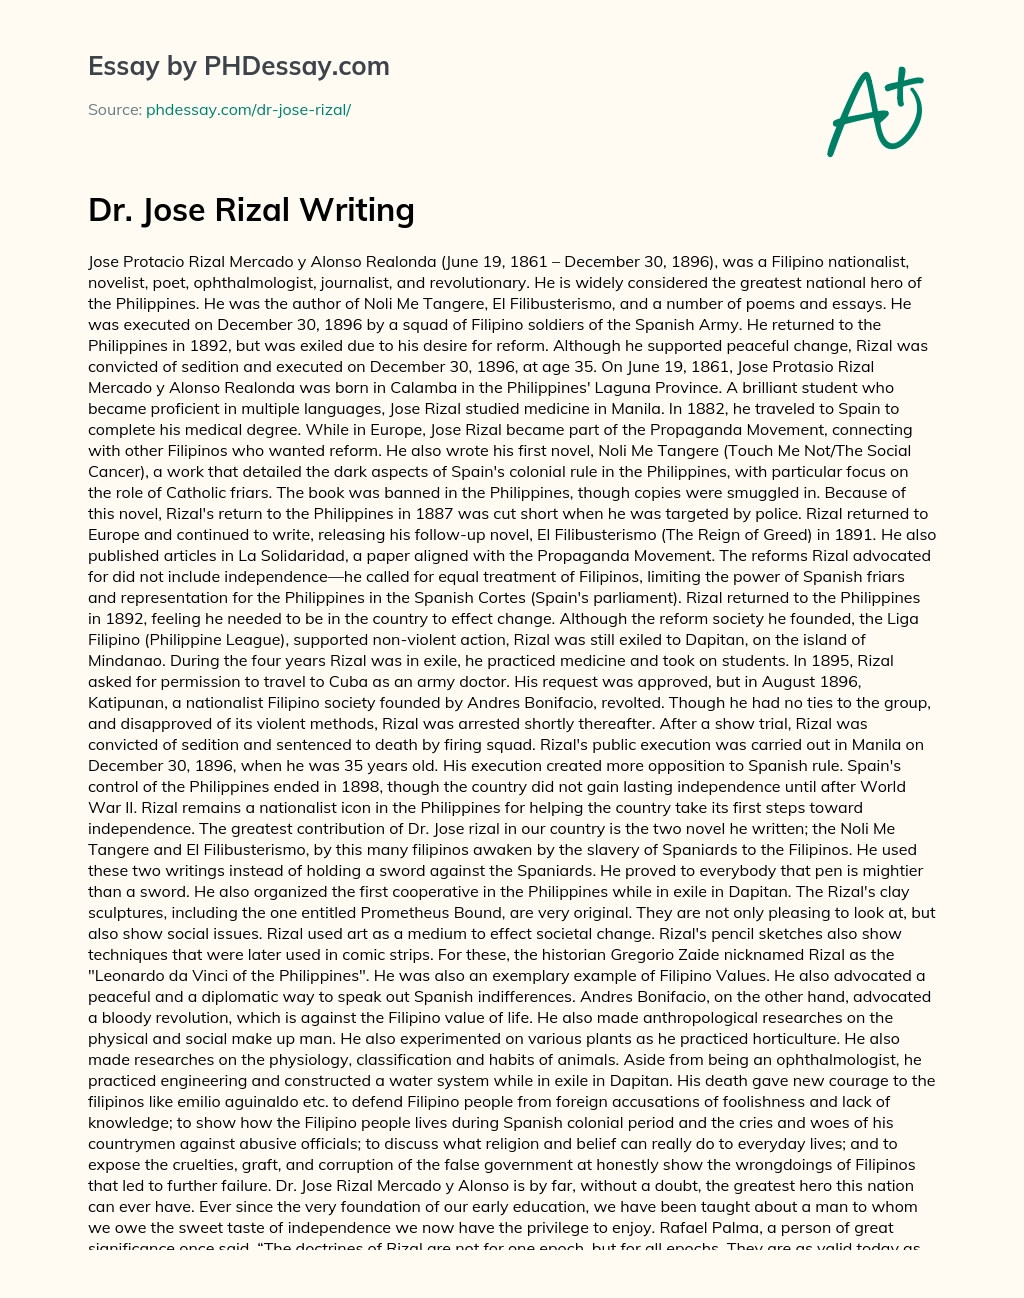 Dr. Jose Rizal Writing essay